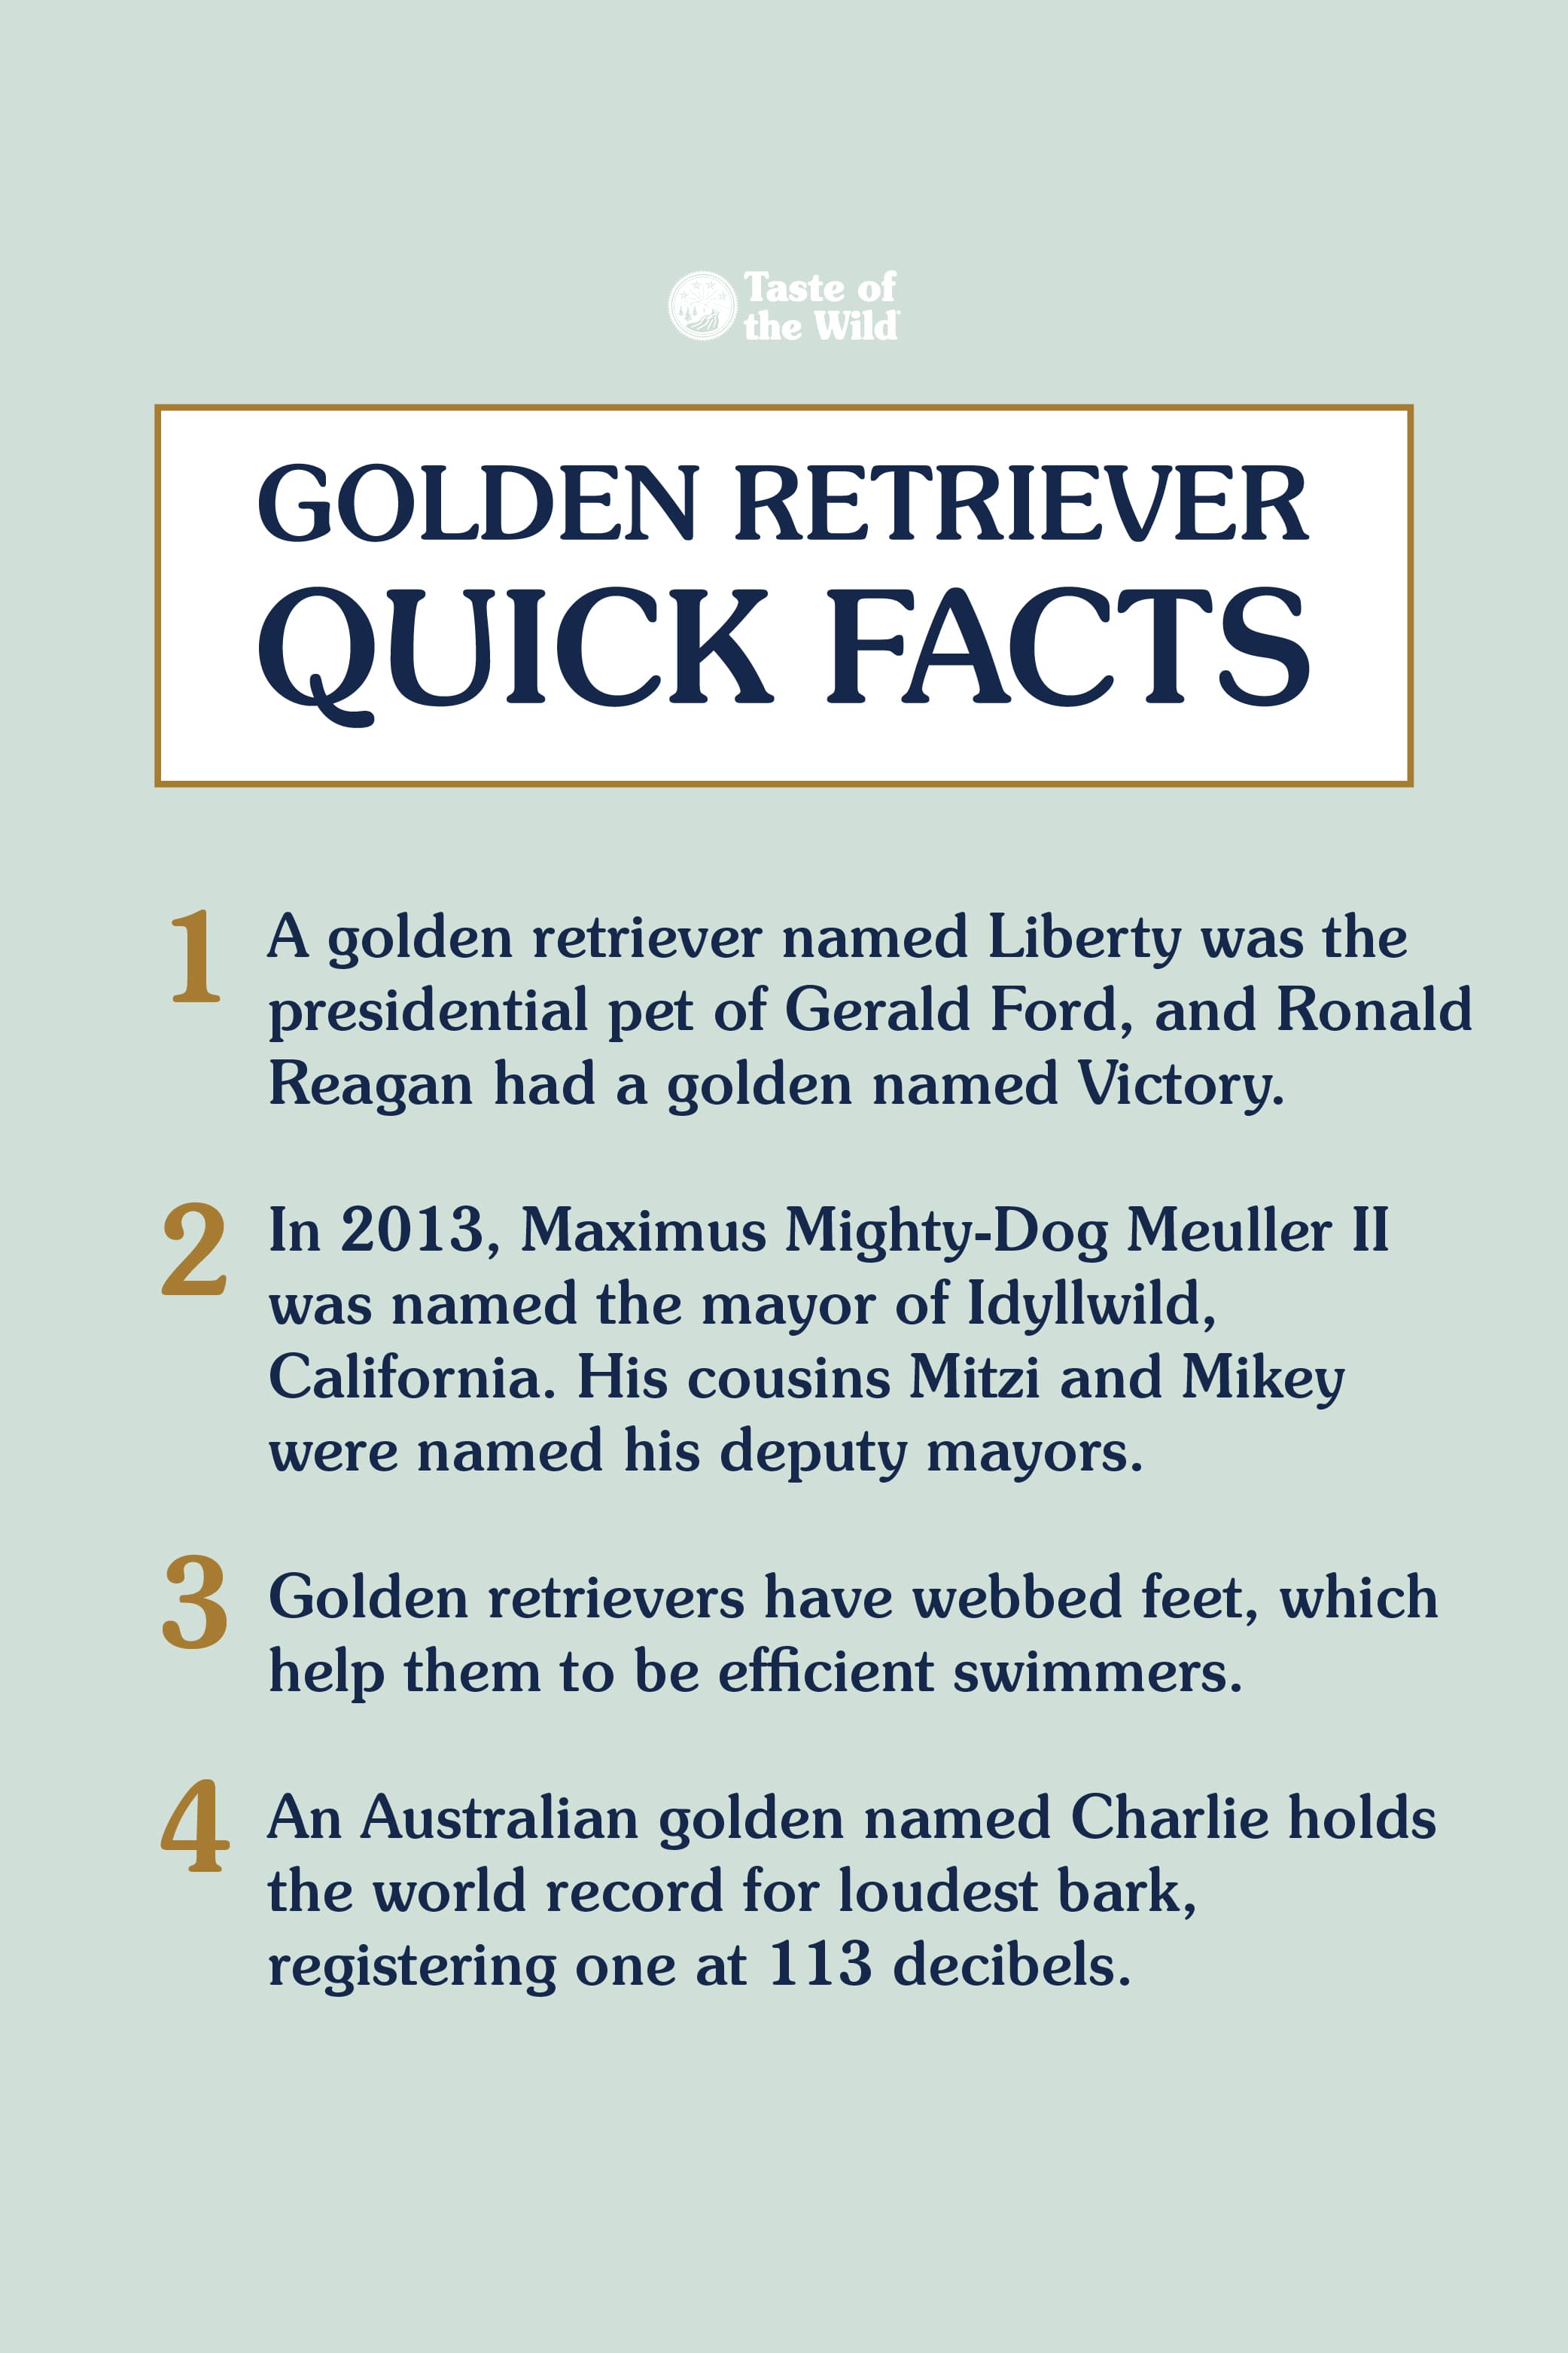 Golden Retriever Quick Facts Infographic | Taste of the Wild